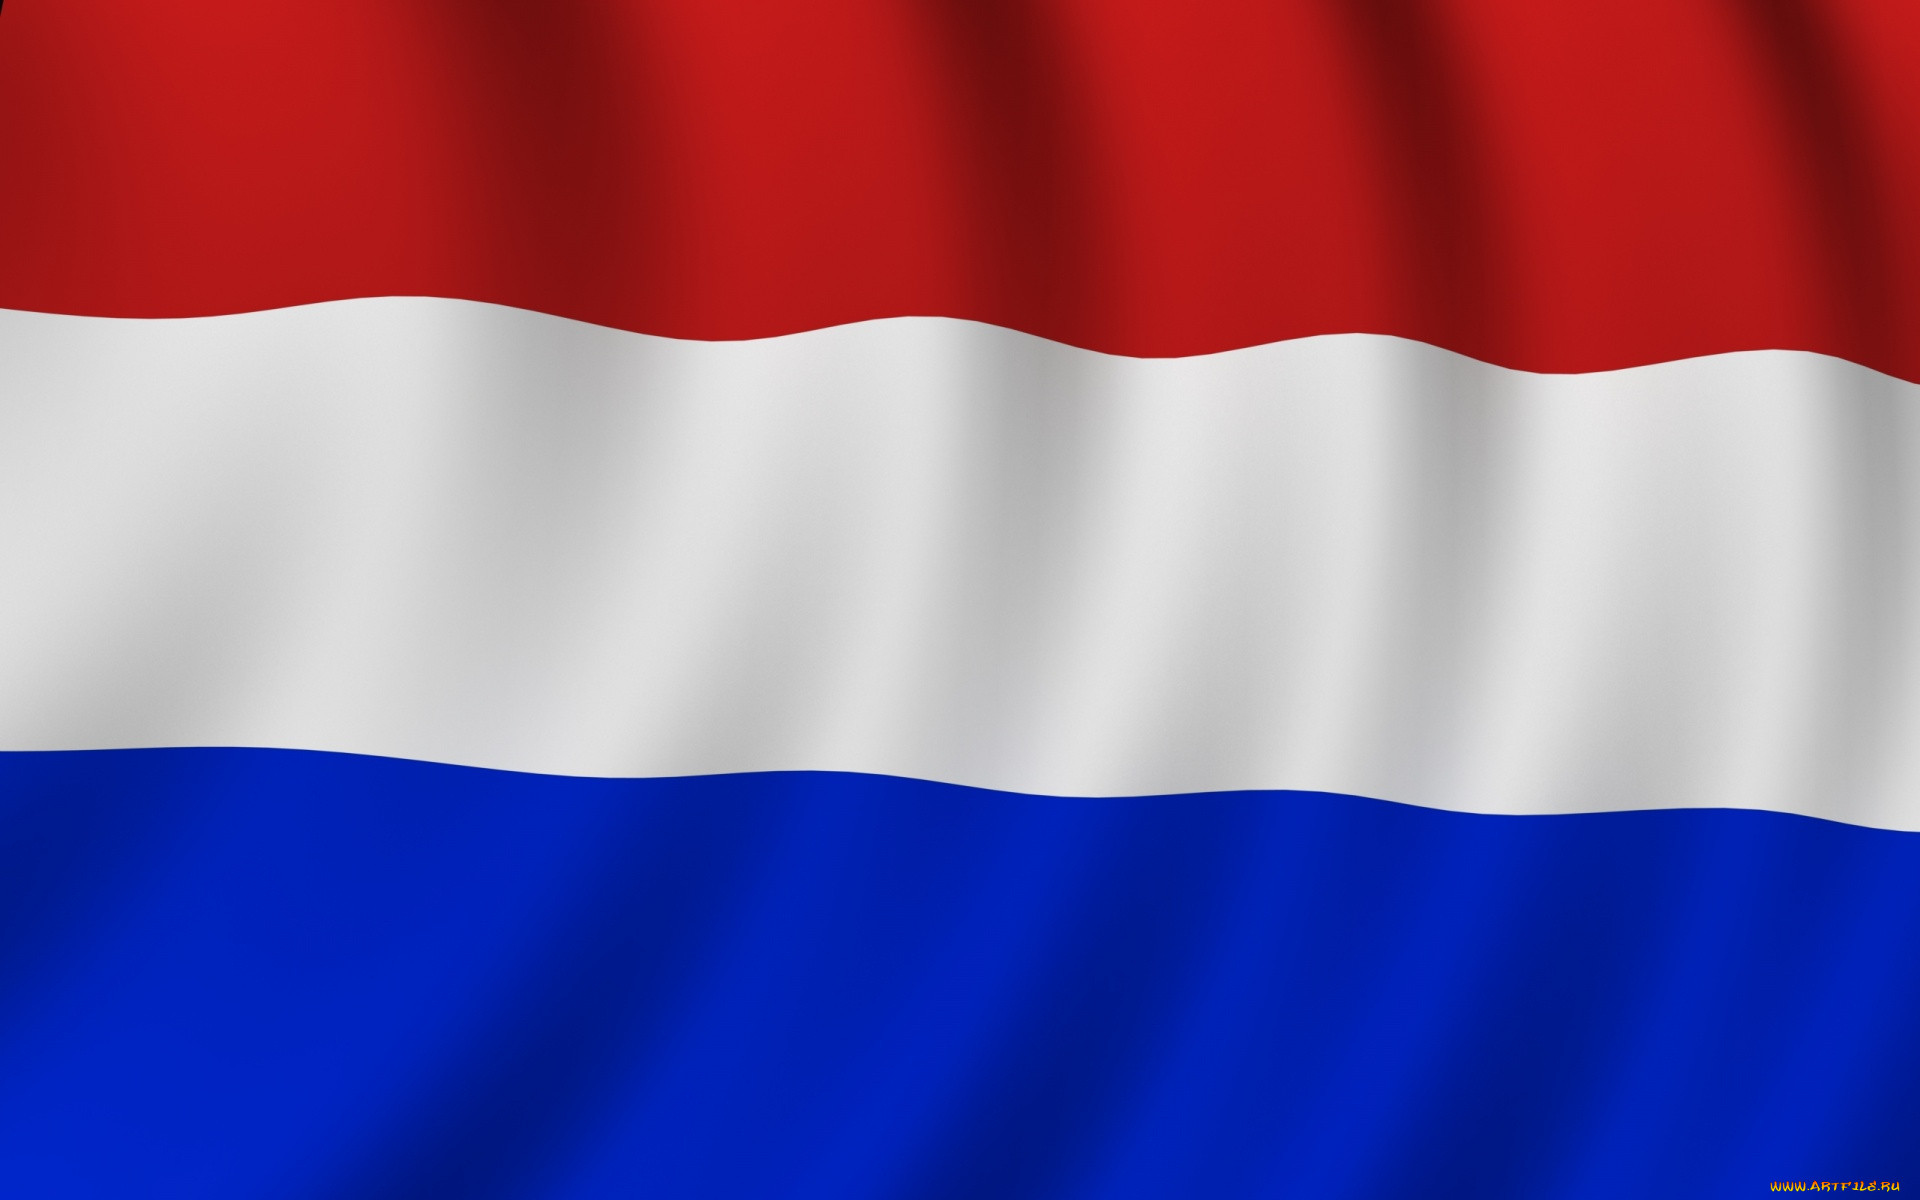 Как выглядит флаг картинка. Флаг Нидерландов. Флаг флаг Нидерландов. Флаг Нидерландов флаг Нидерландов. Королевство Нидерланды флаг.